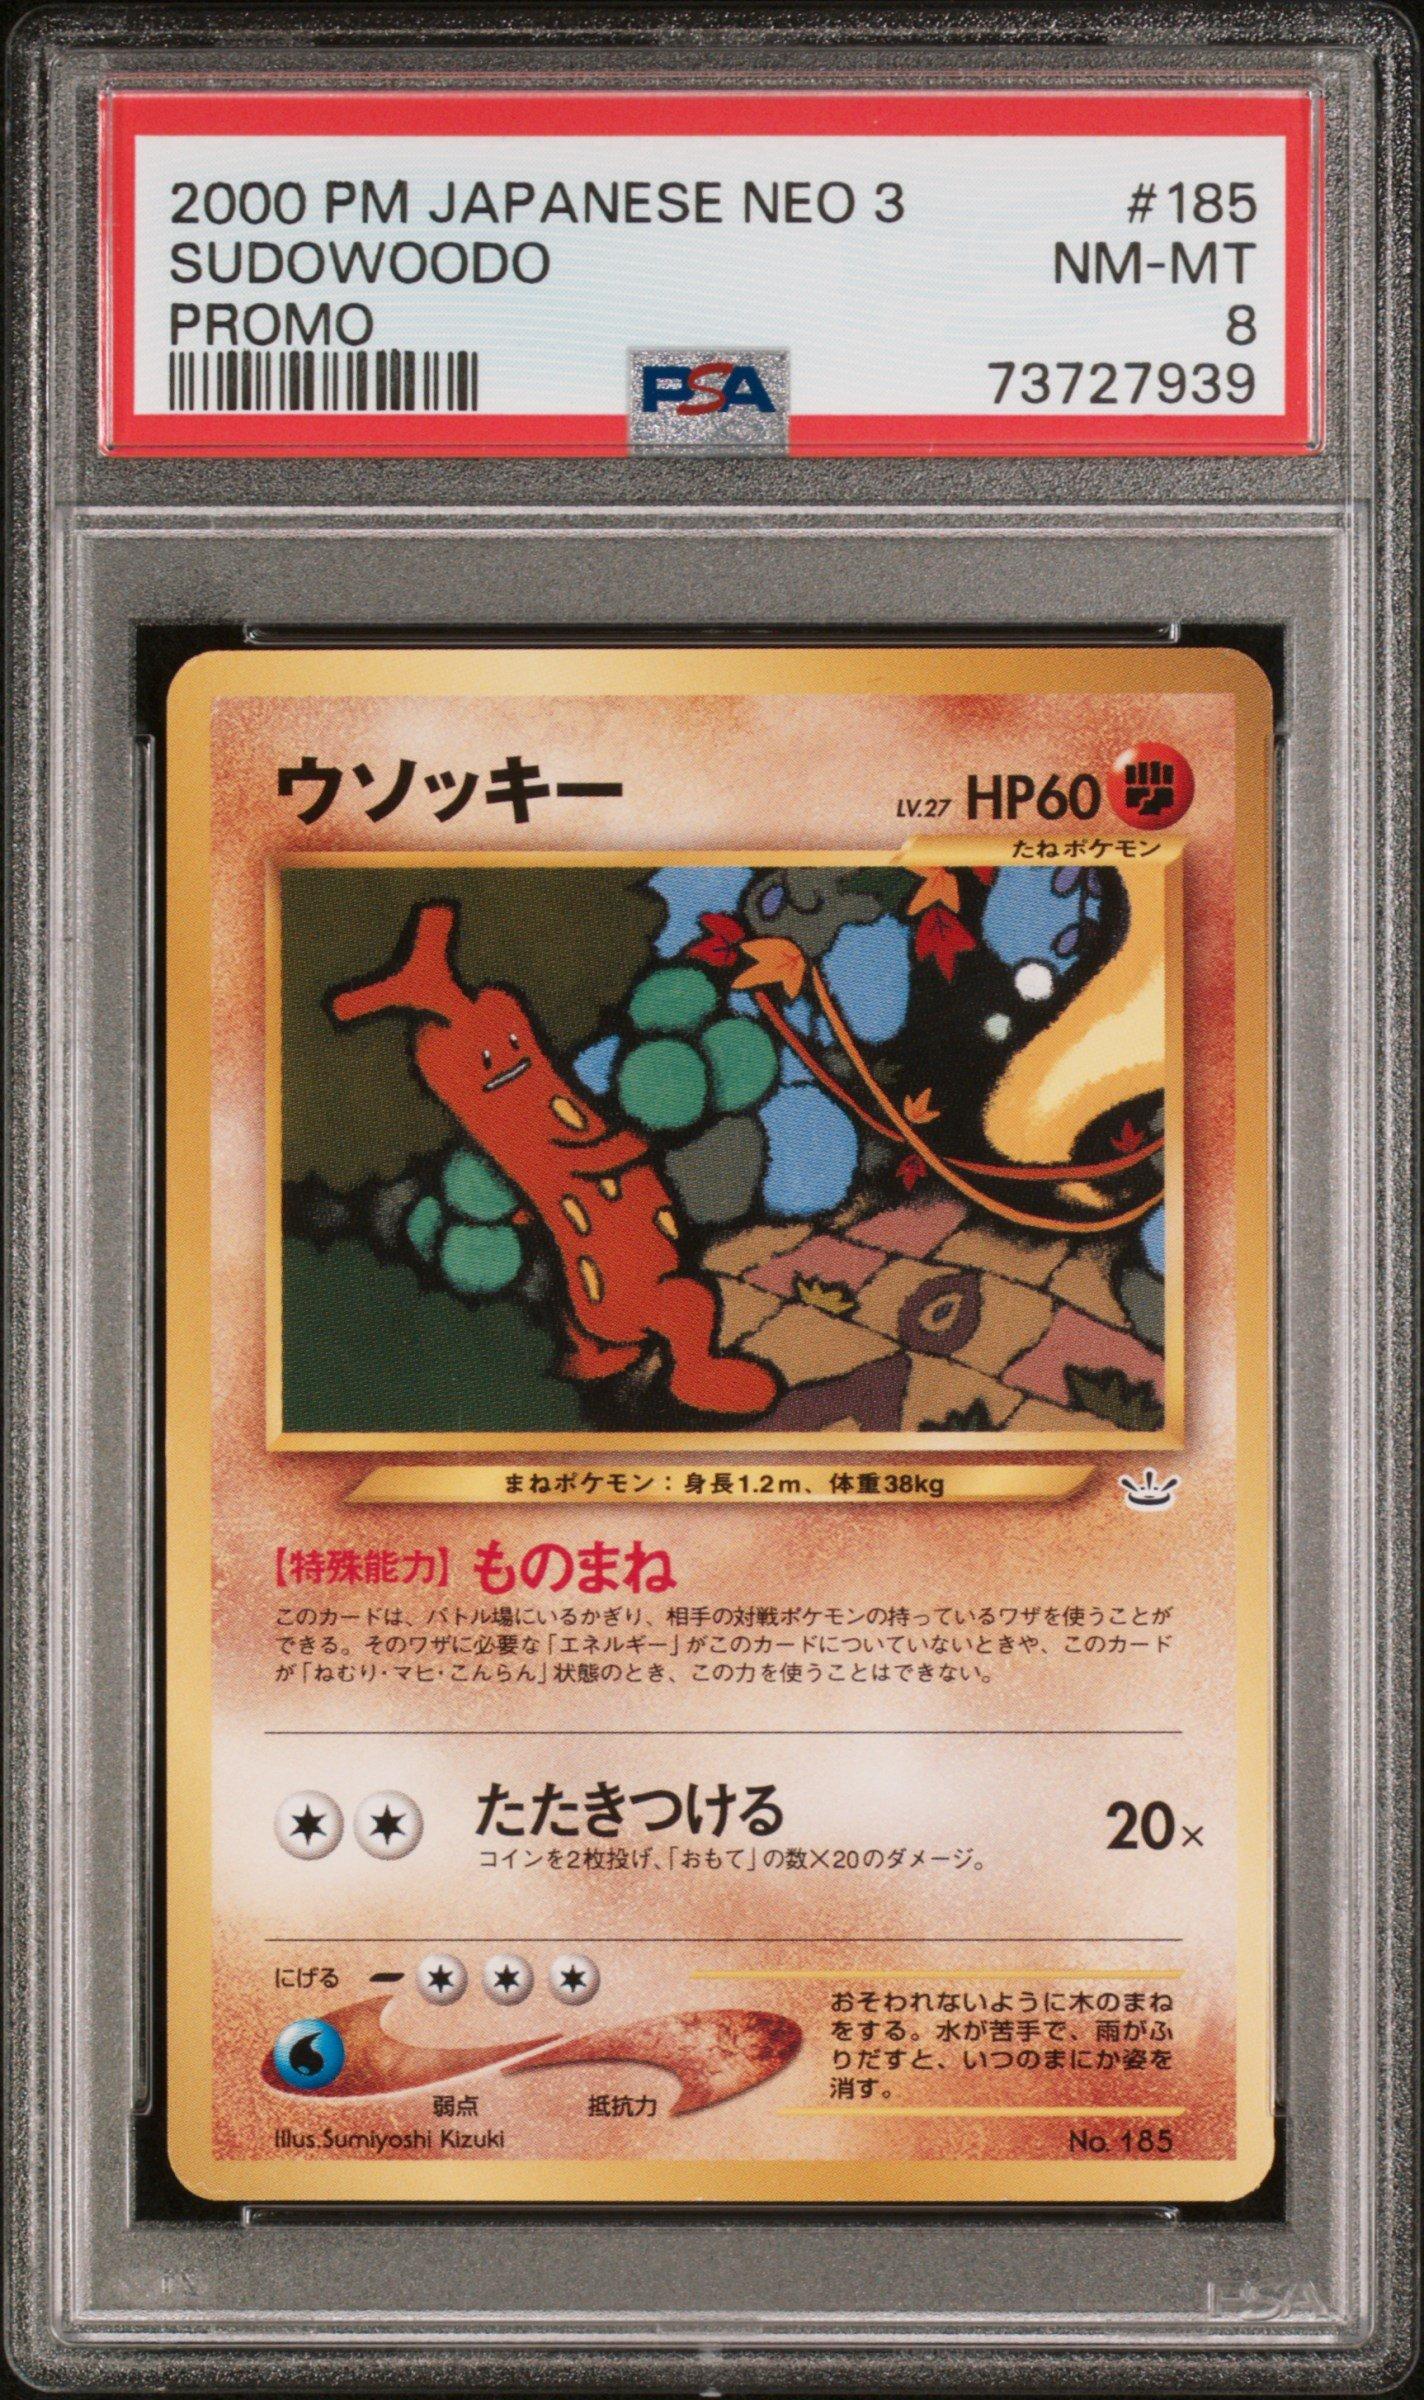 2000 Pokemon Japanese Neo 3 Promo 185 Sudowoodo PSA 8